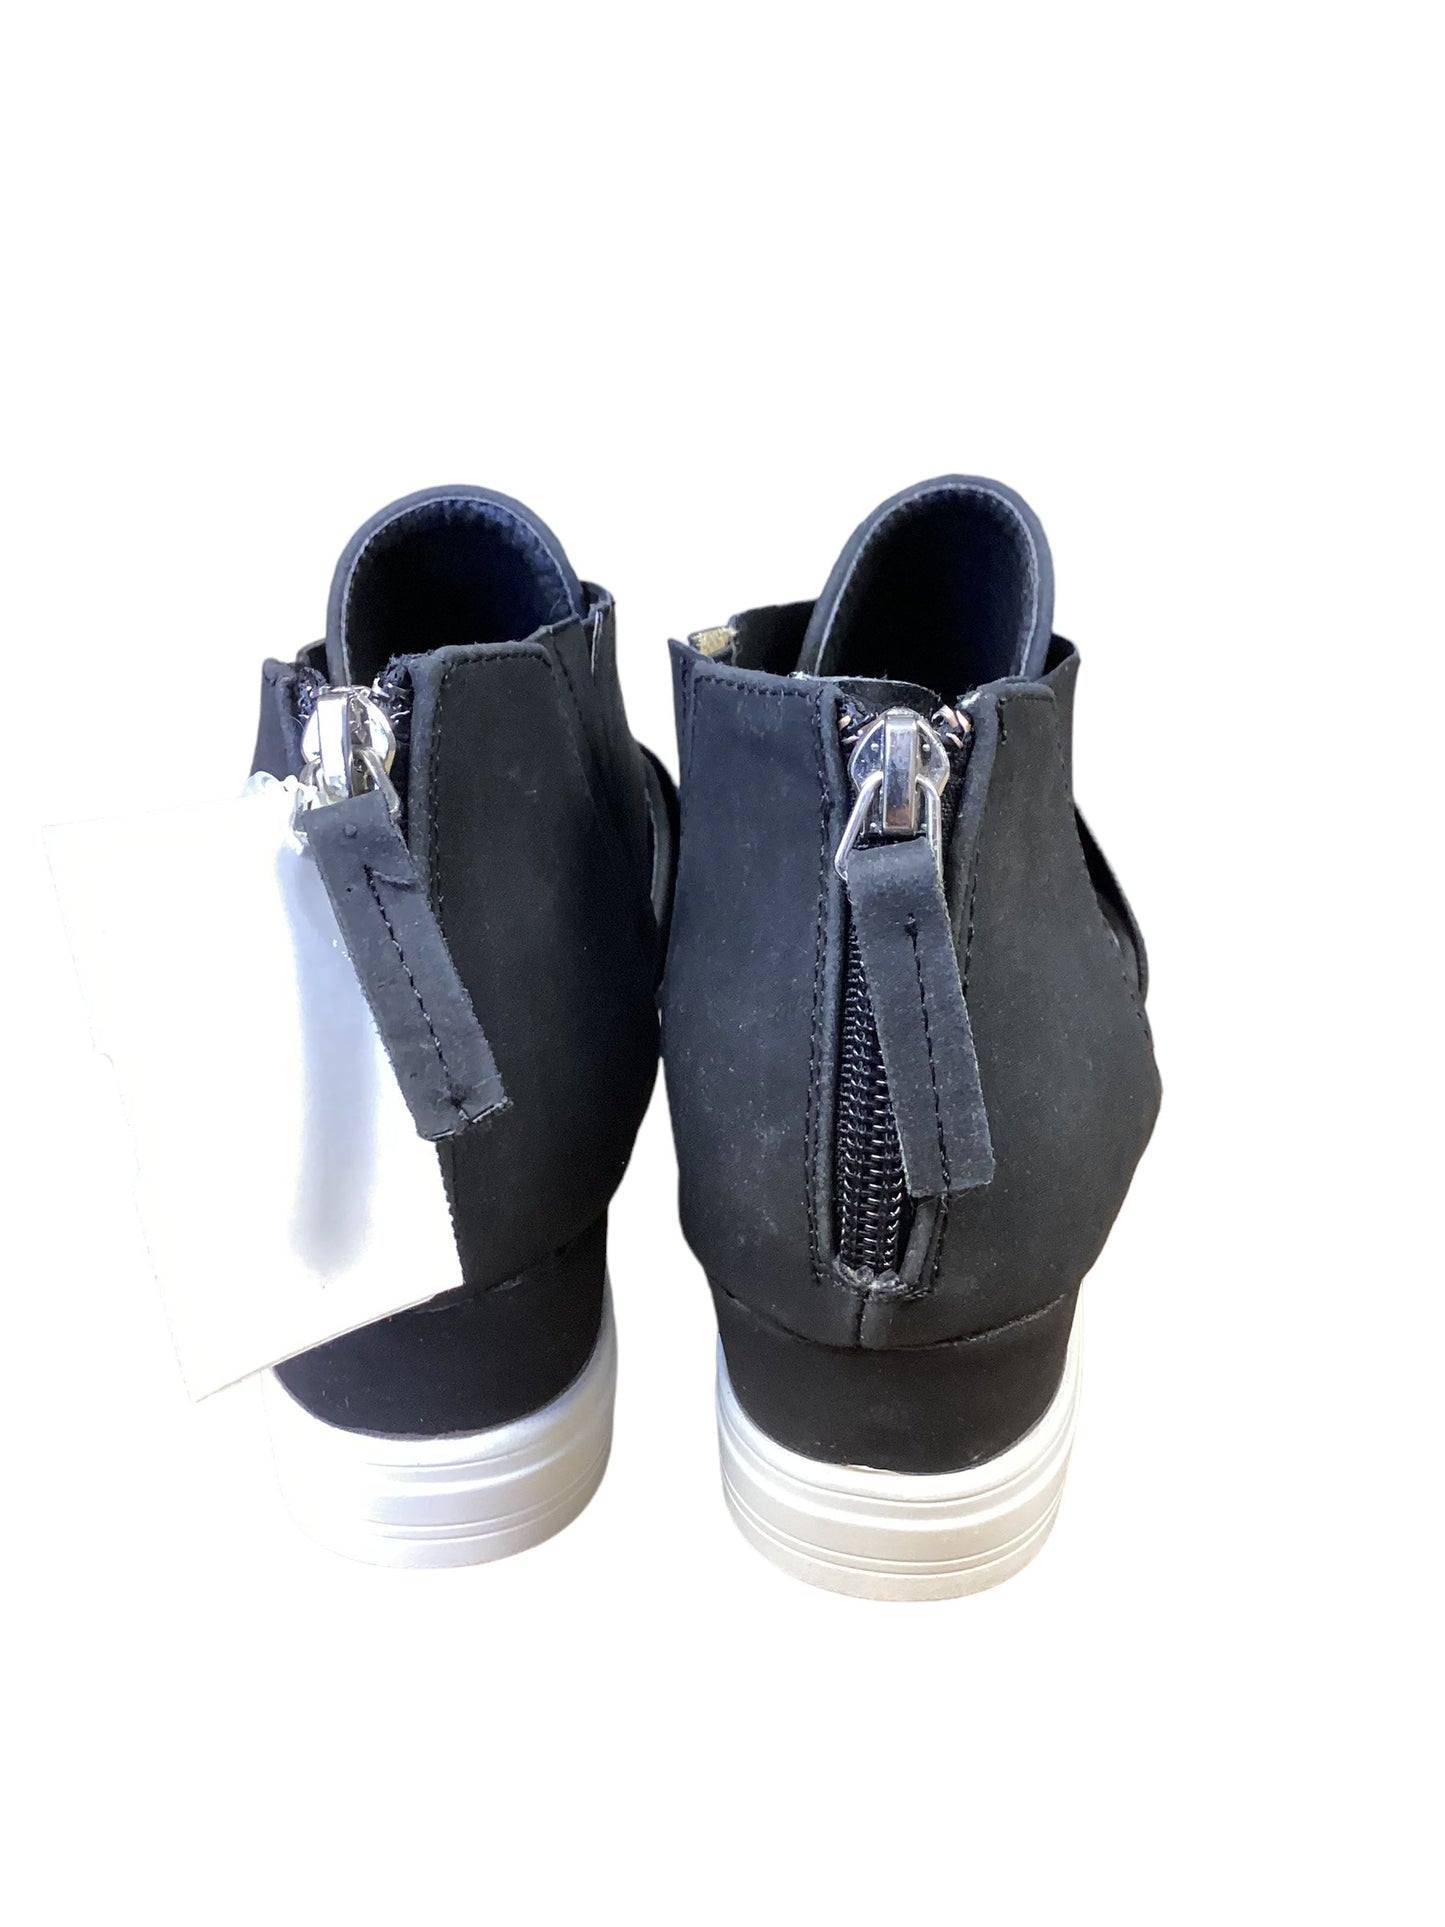 Black Shoes Flats Clothes Mentor, Size 6.5